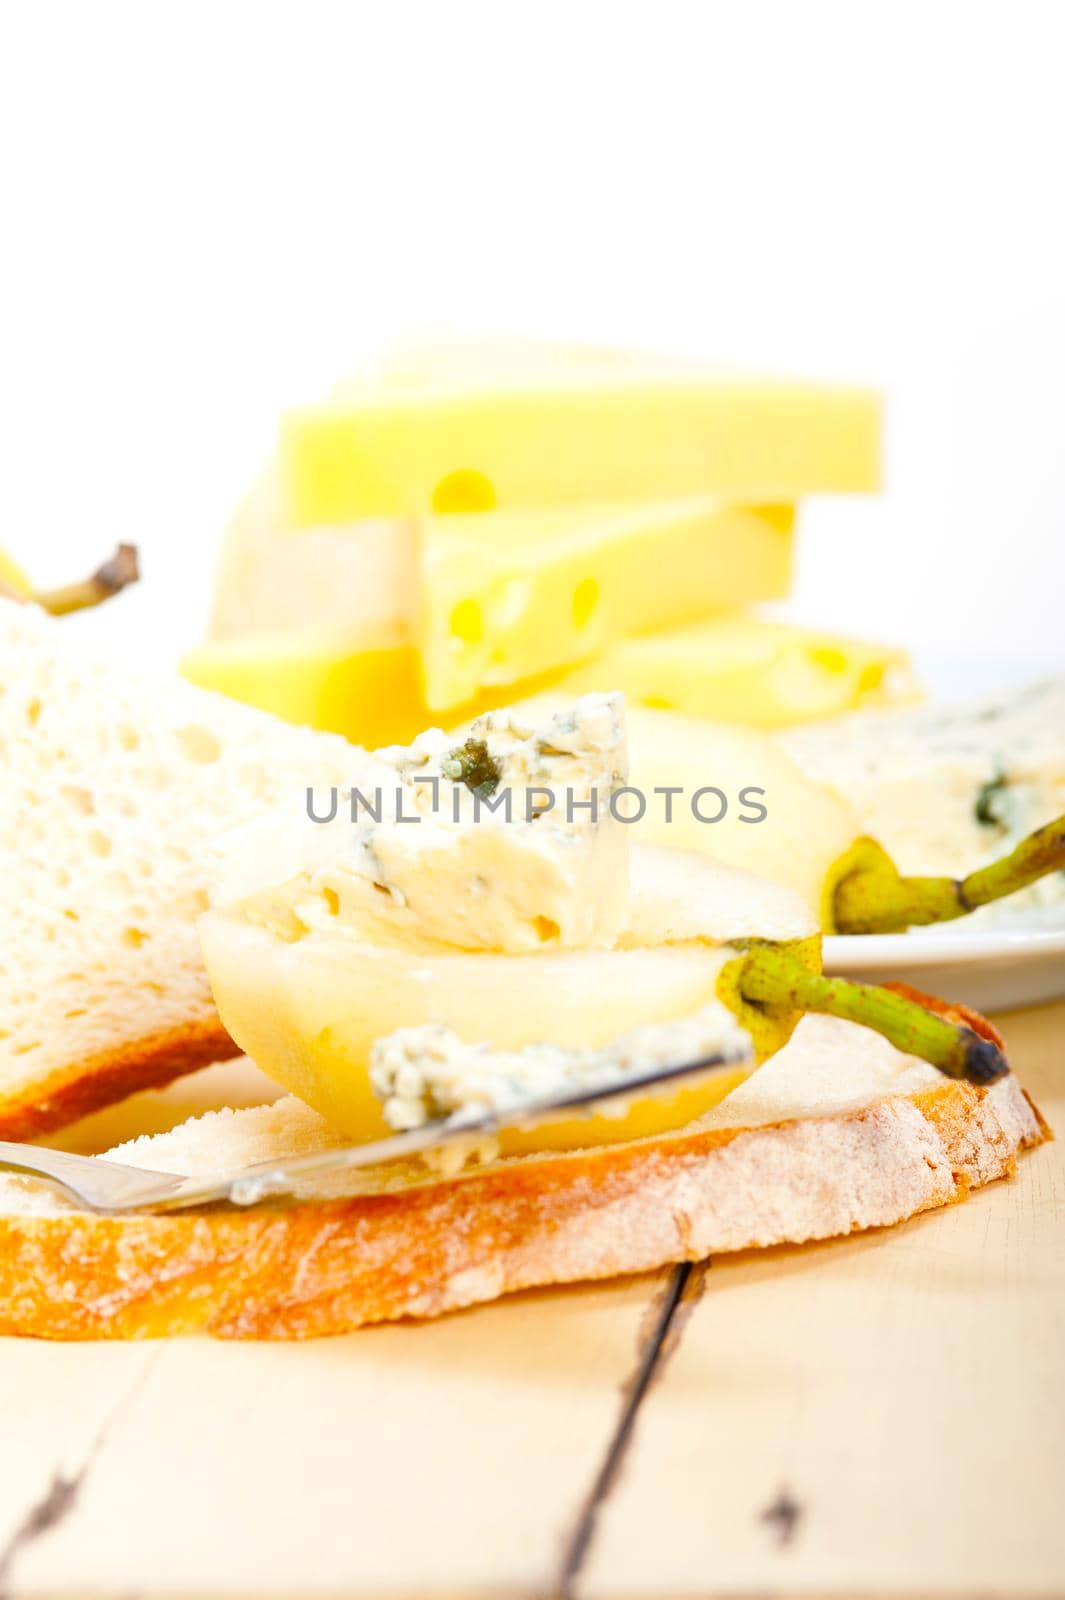 cheese and pears by keko64